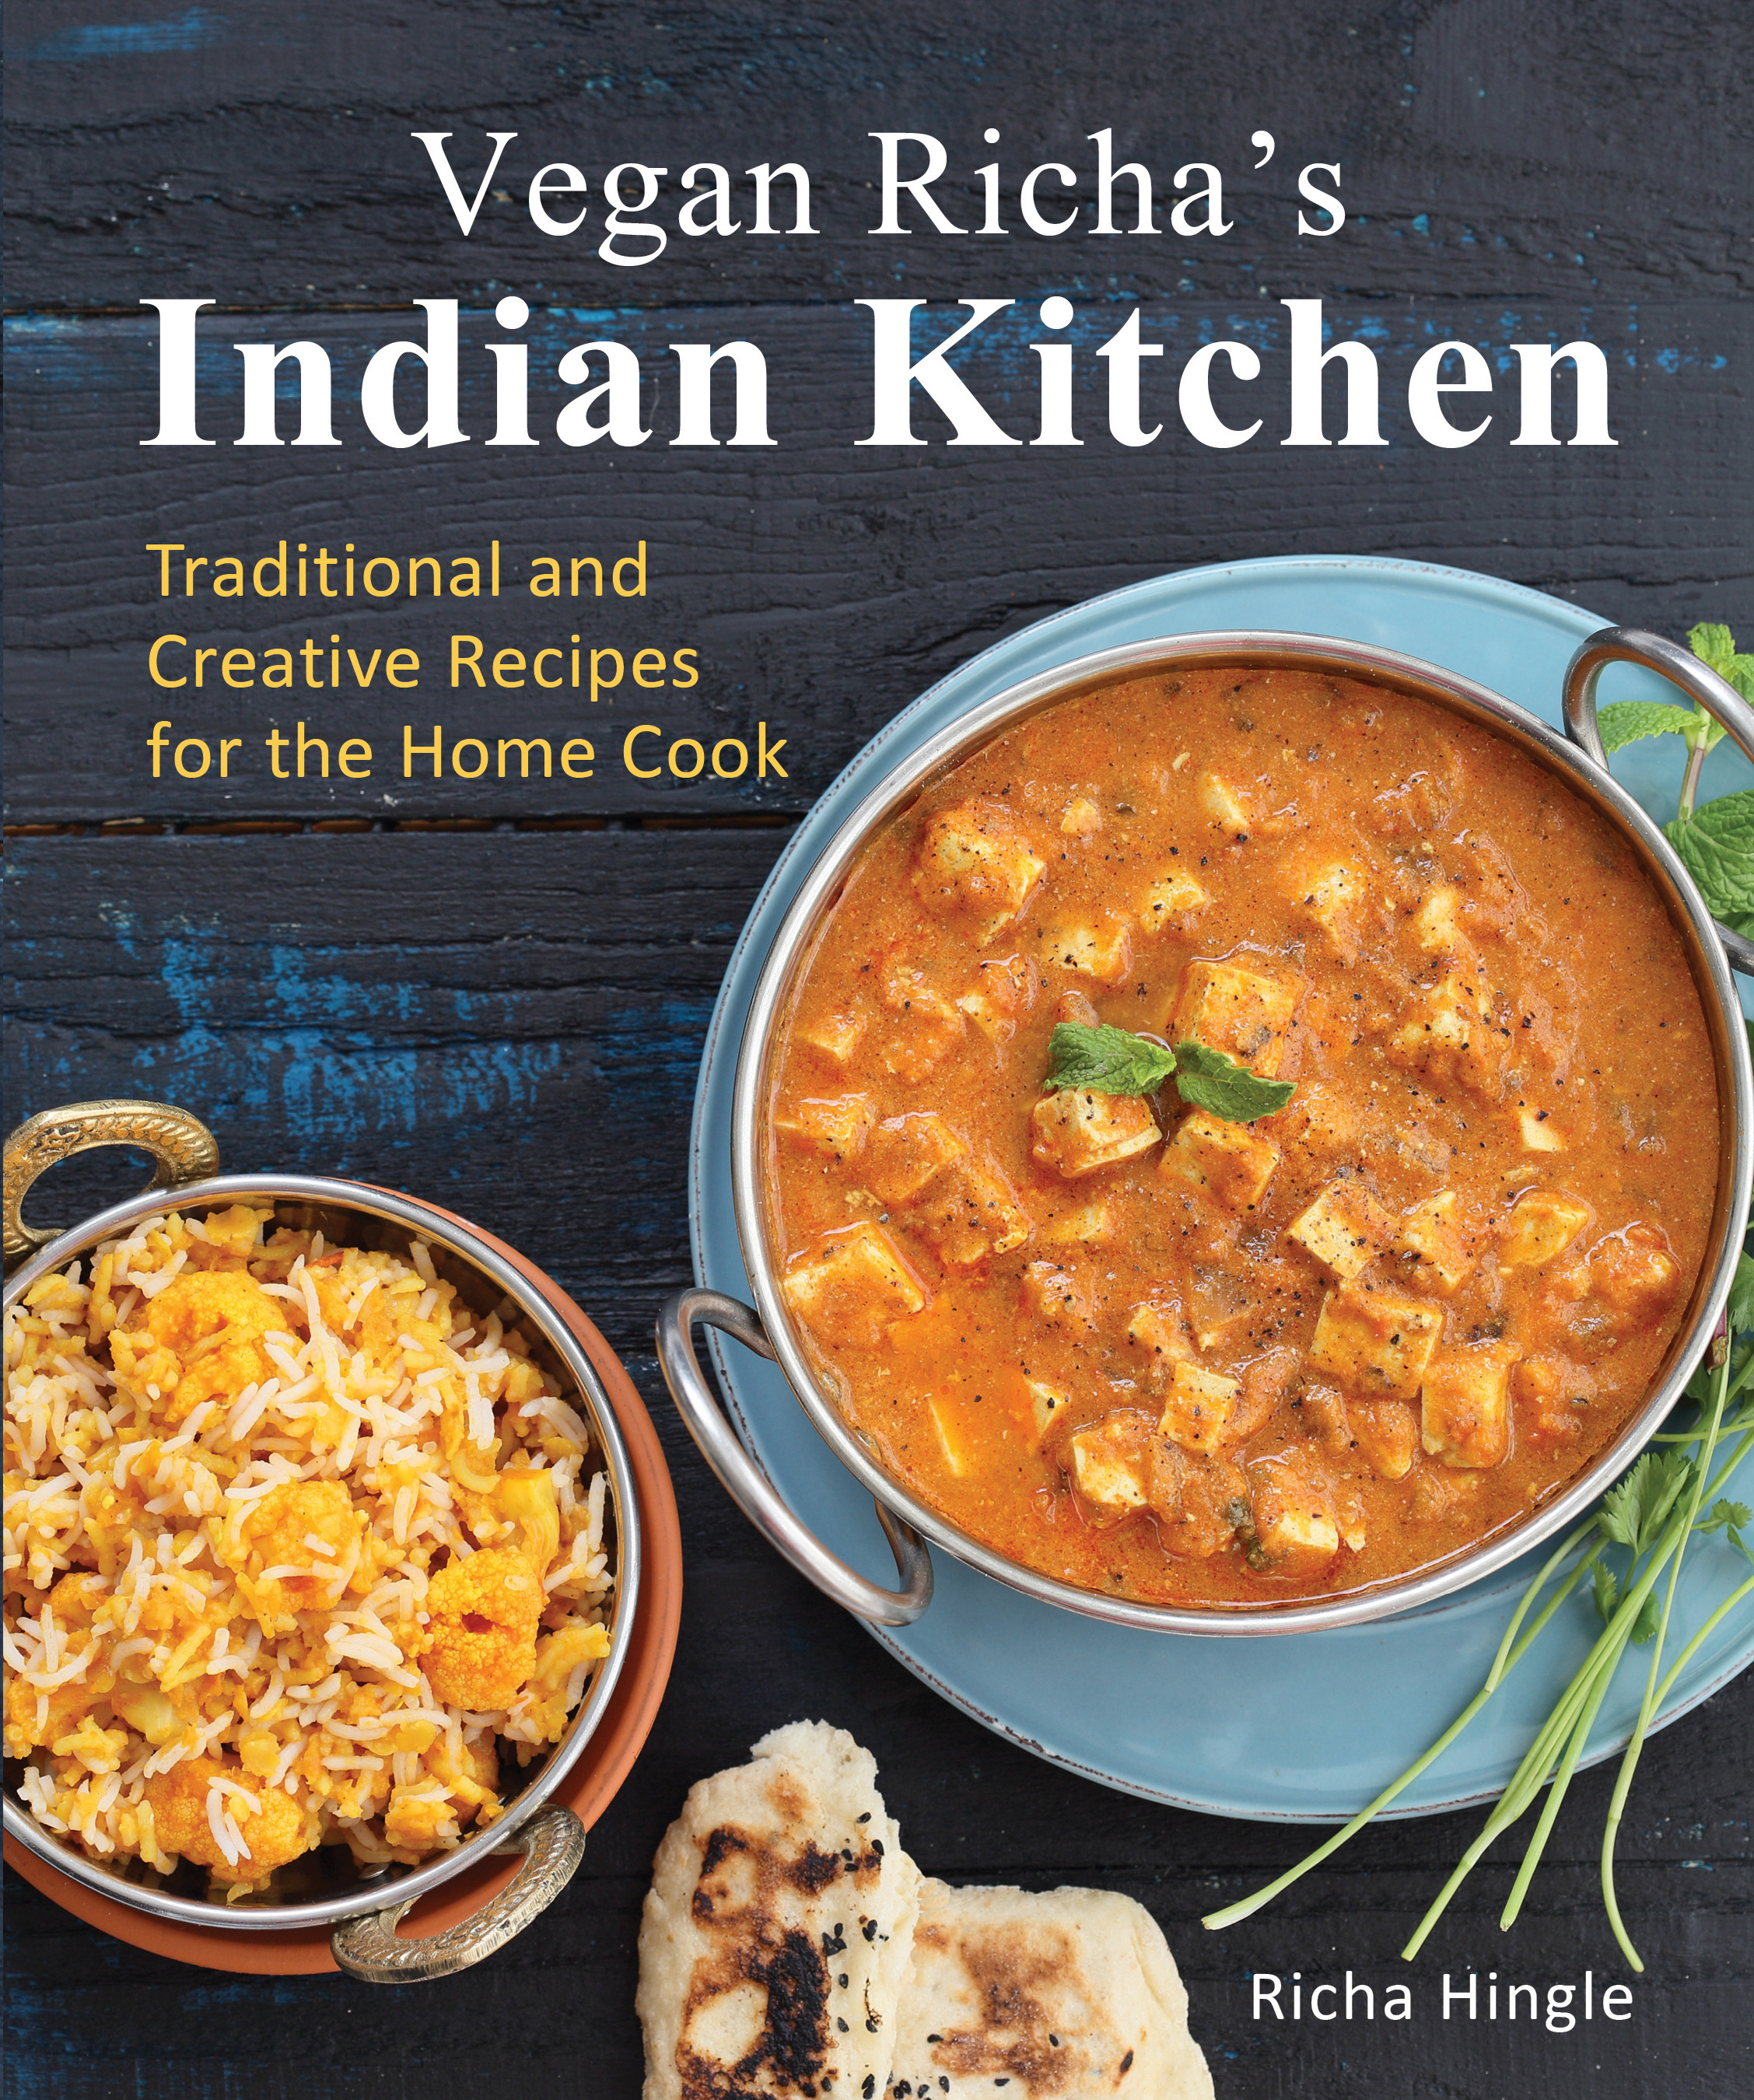 Vegan Recipes Of India
 CHAAT MAGAZINE Gift SUBSCRIPTION AND Vegan Richa’s Indian